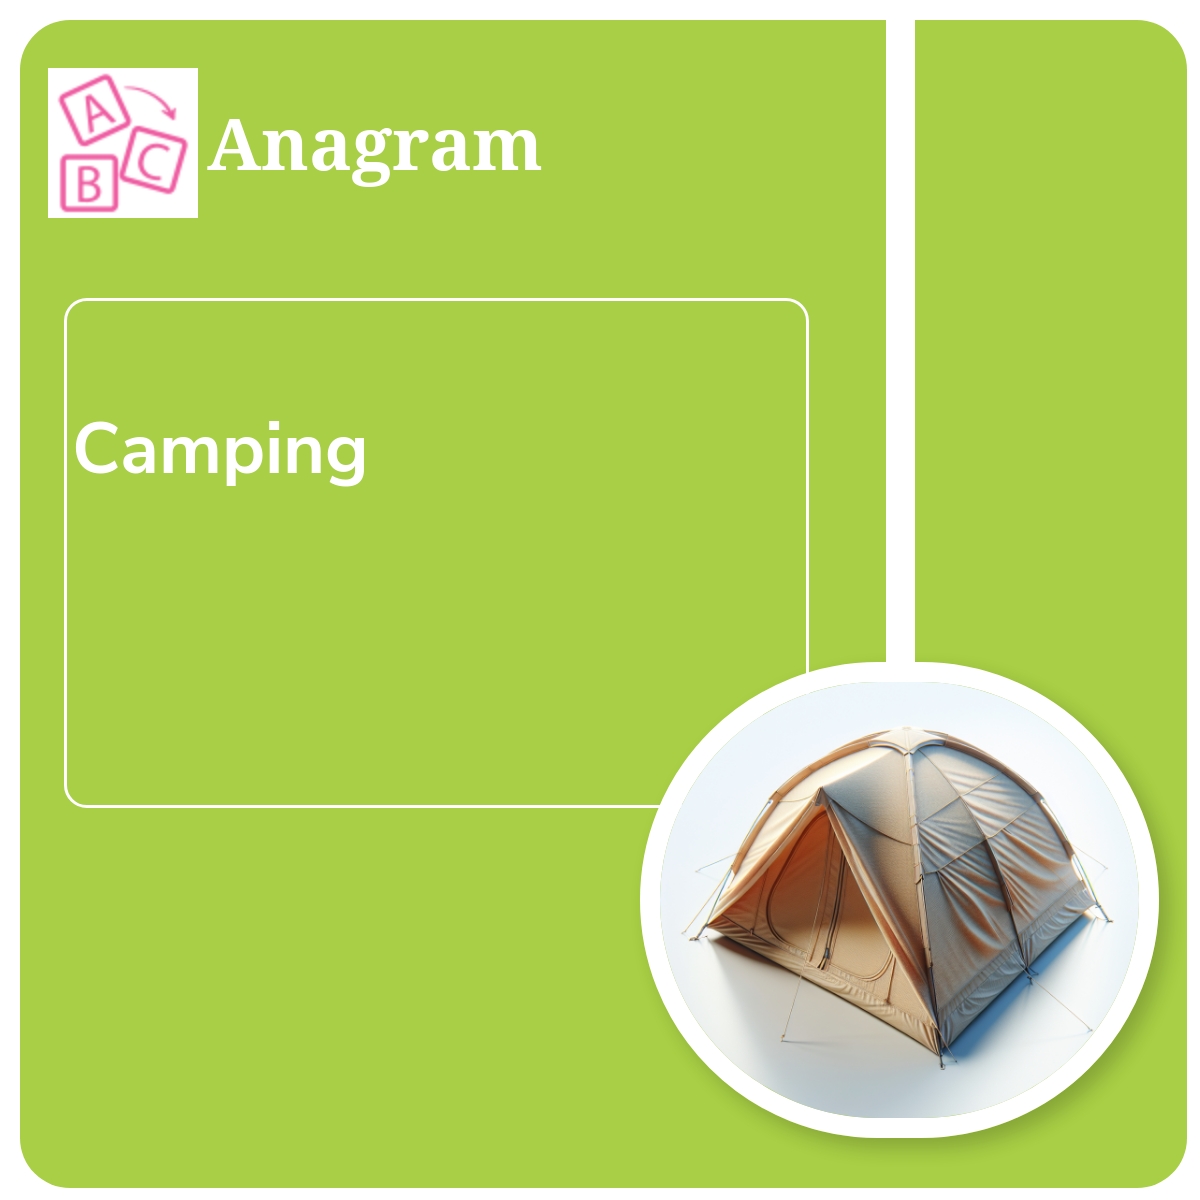 Simple Anagram: Camping